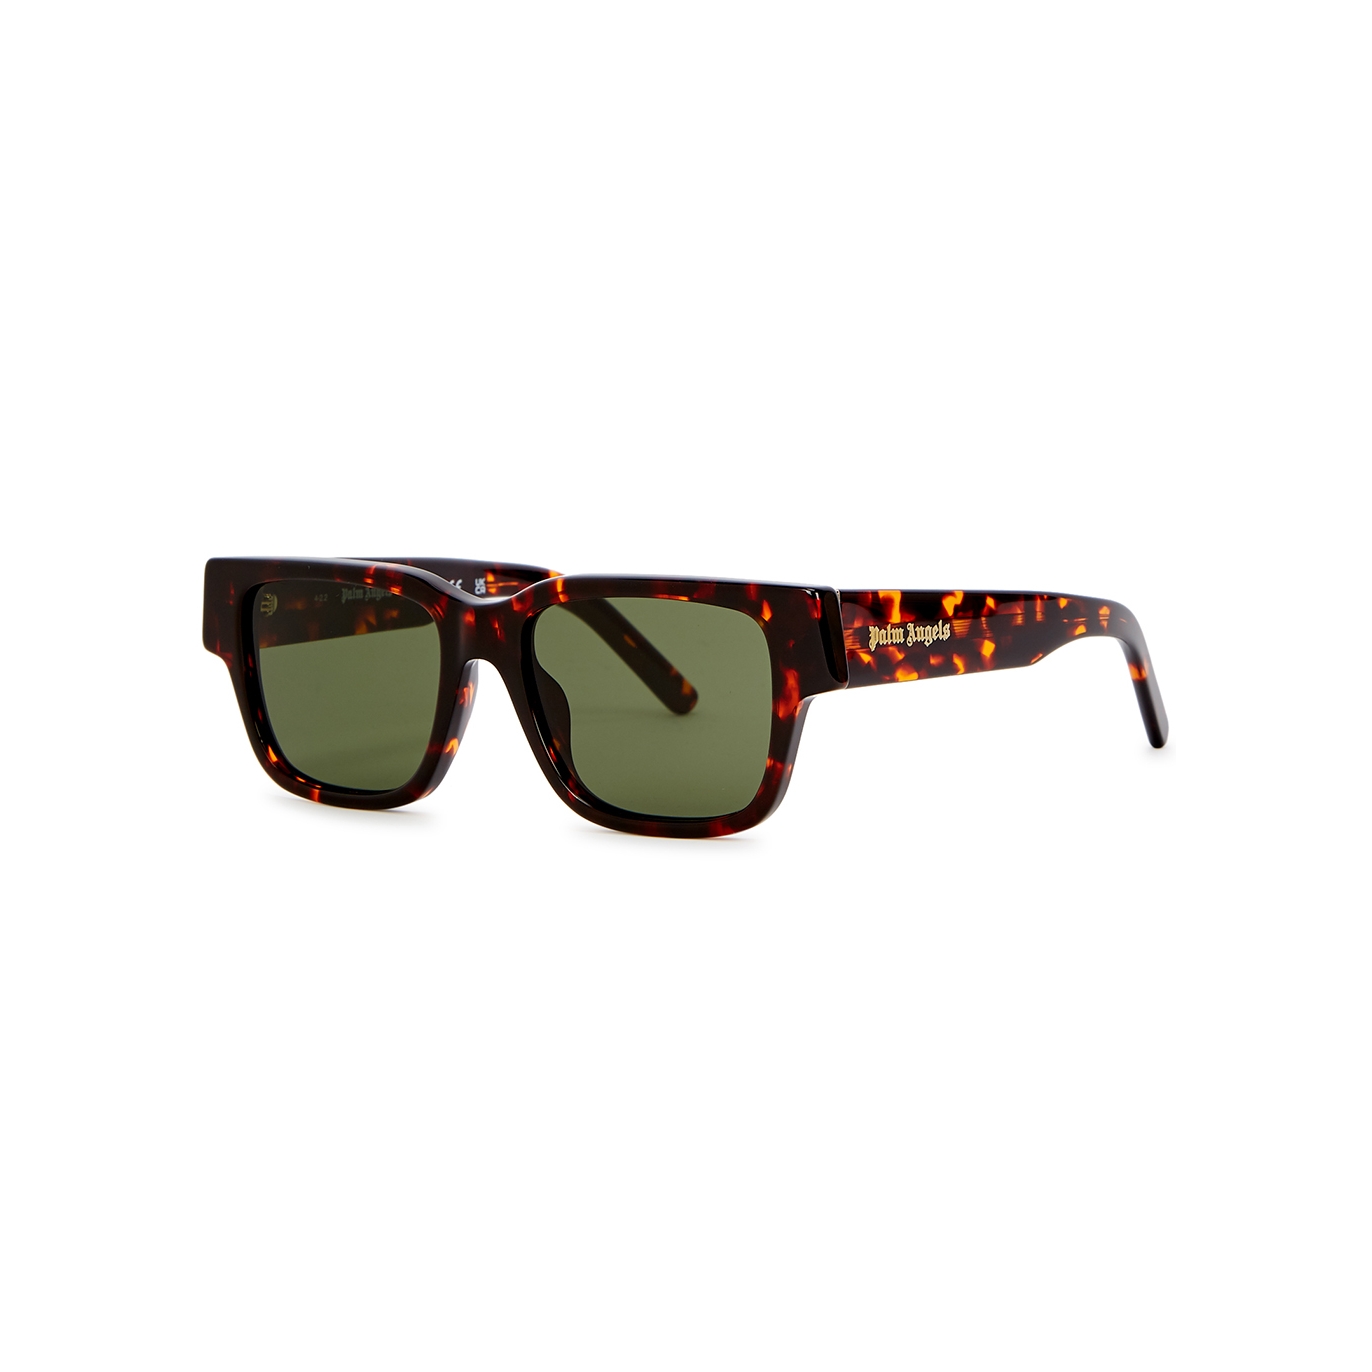 Palm Angels Newport Square-frame Sunglasses, Sunglasses, Green